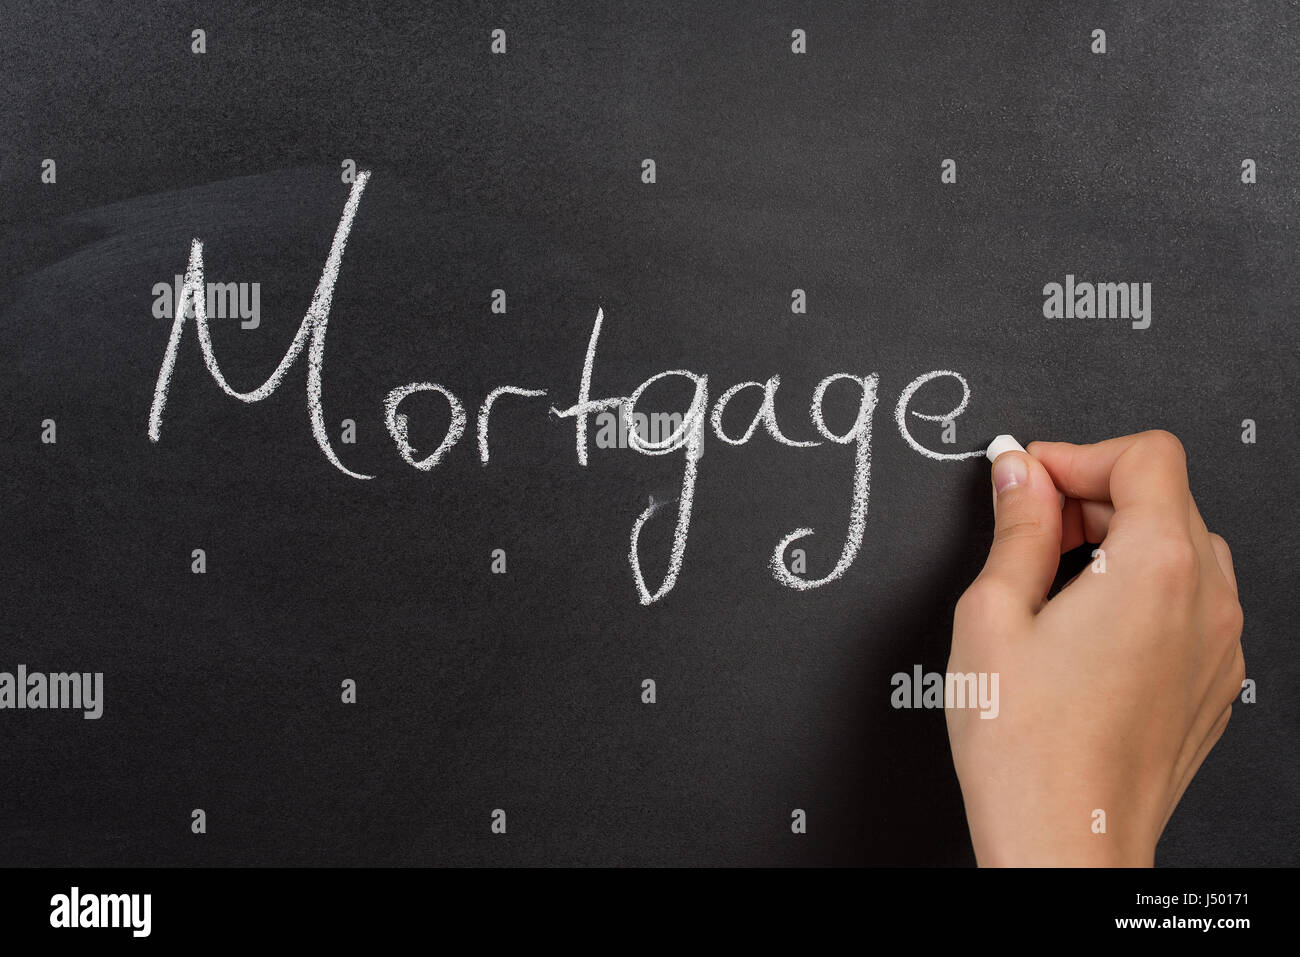 Mortgage word written on the blackboard Stock Photo